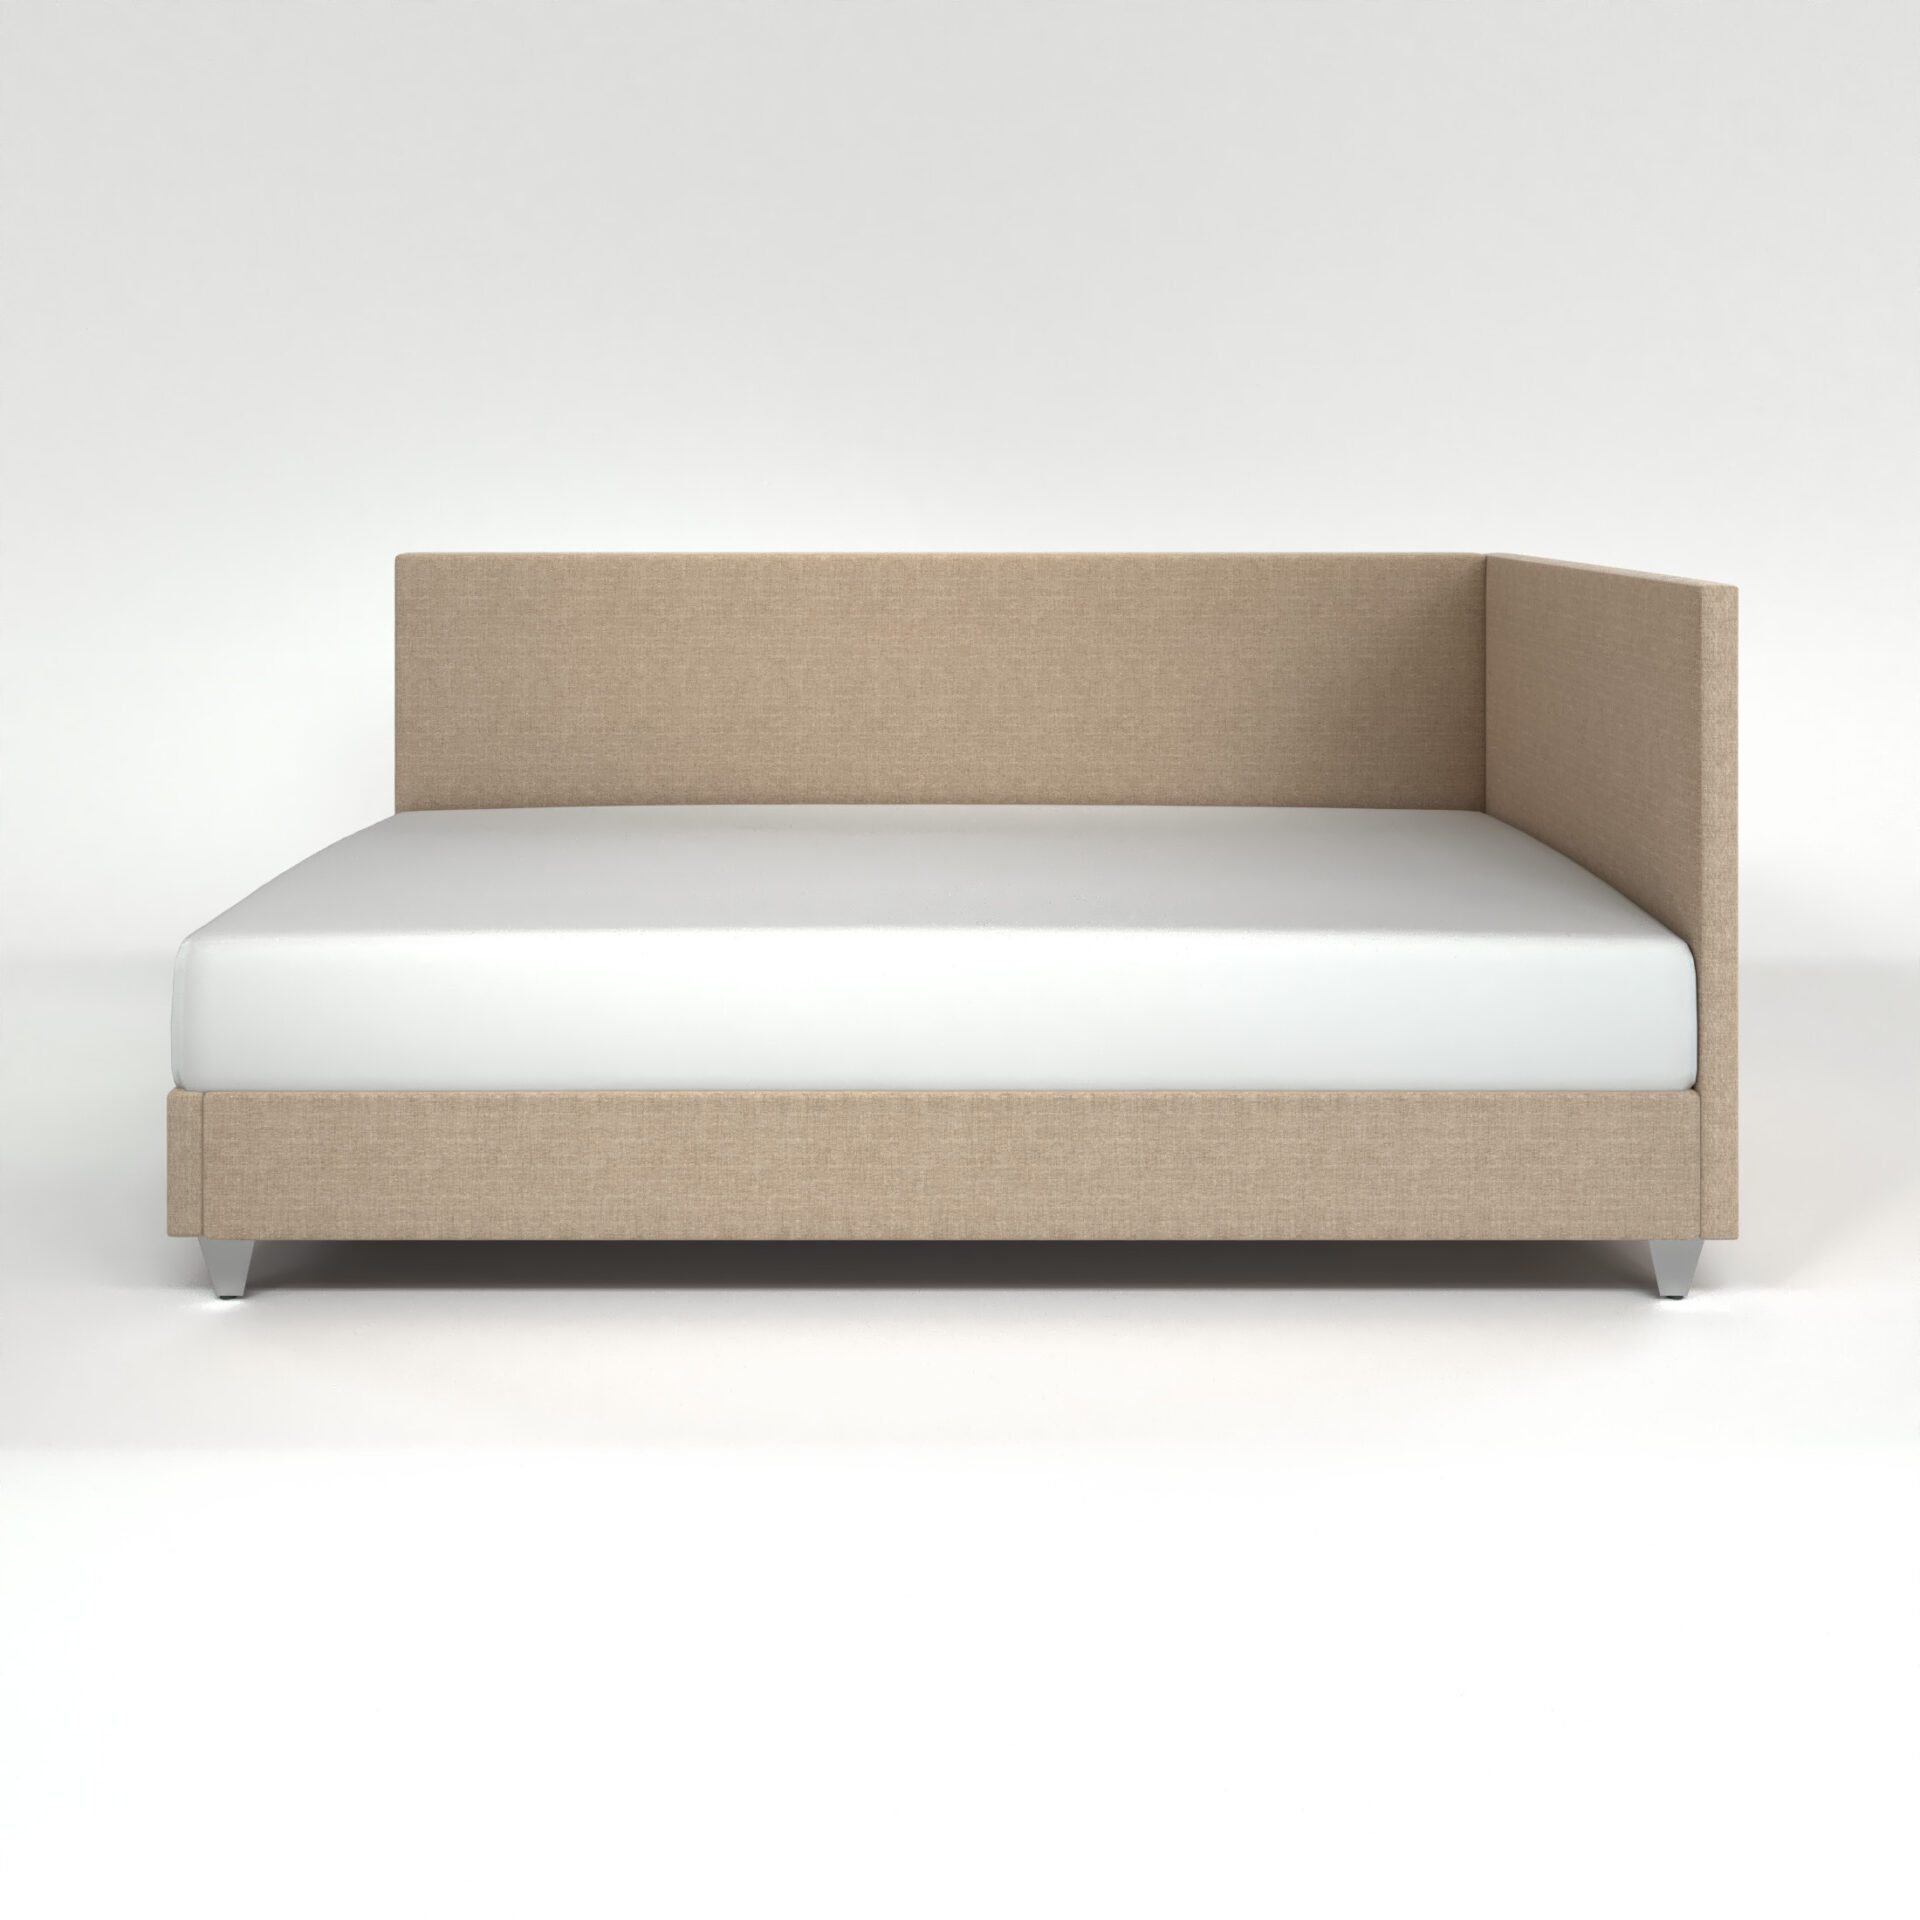 ADARA-daybed-blend-home-furnishings